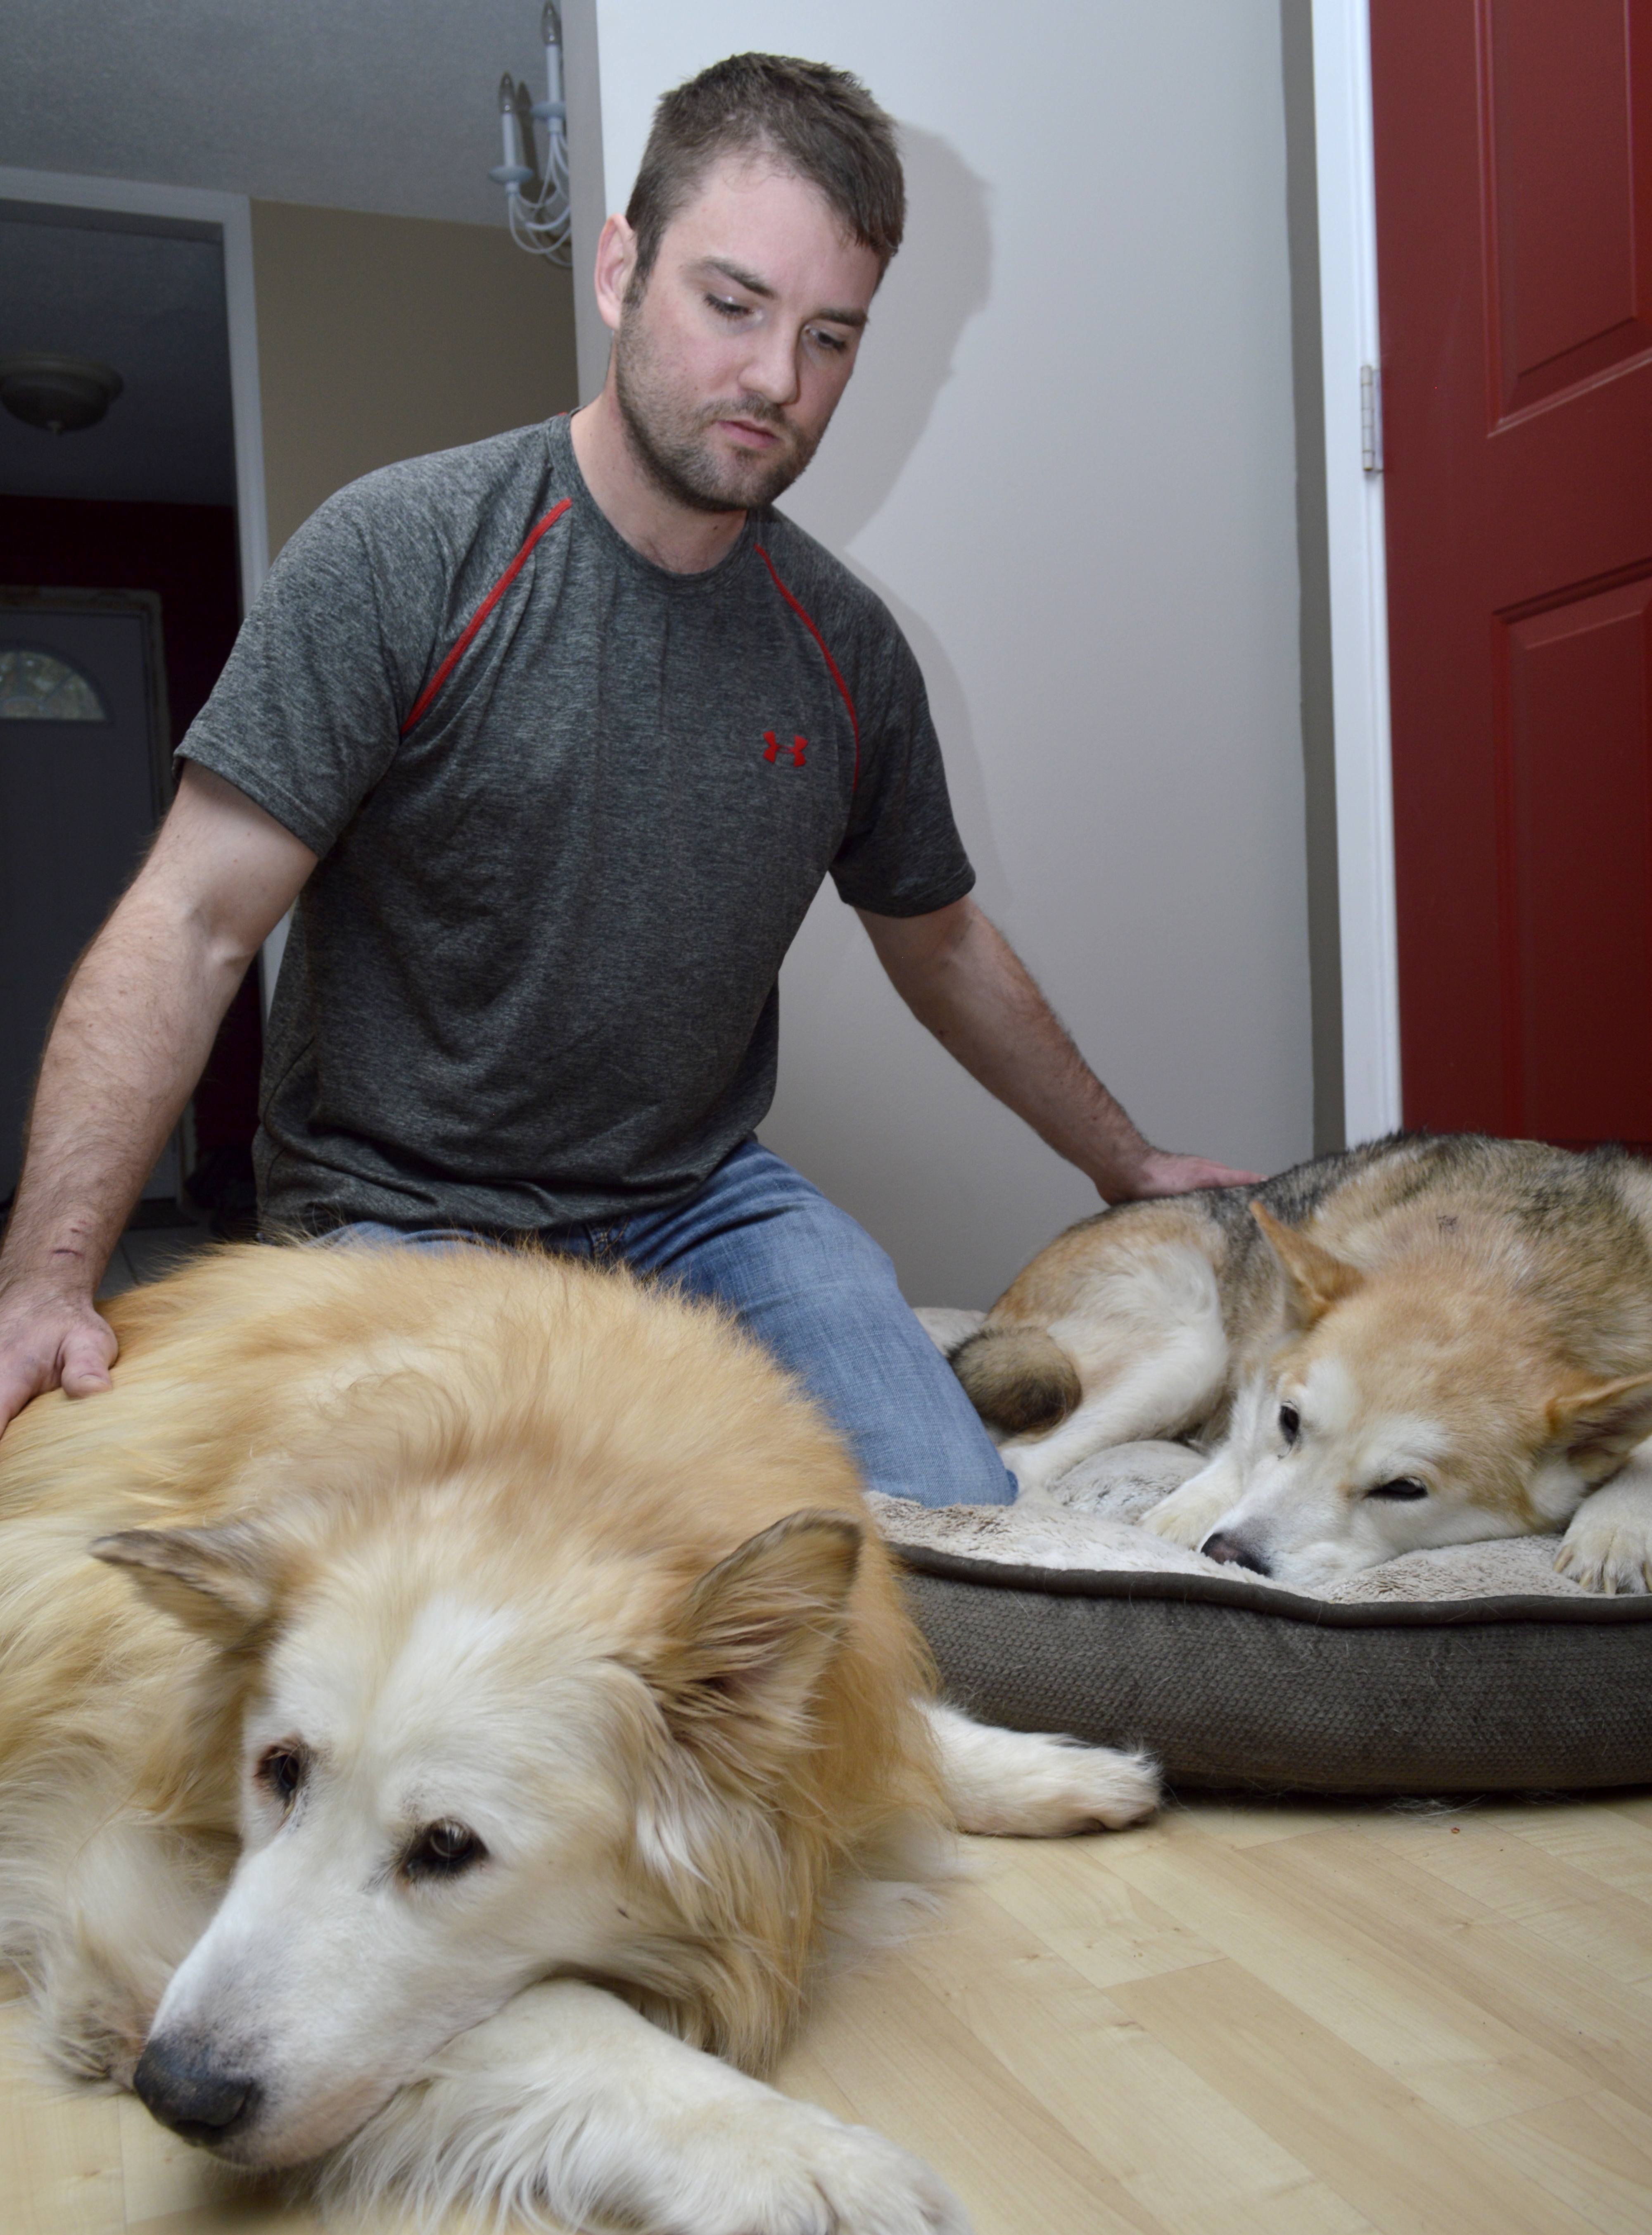 SAFE AND SOUND - Red Deer resident William Gibb pets his dog Sasha